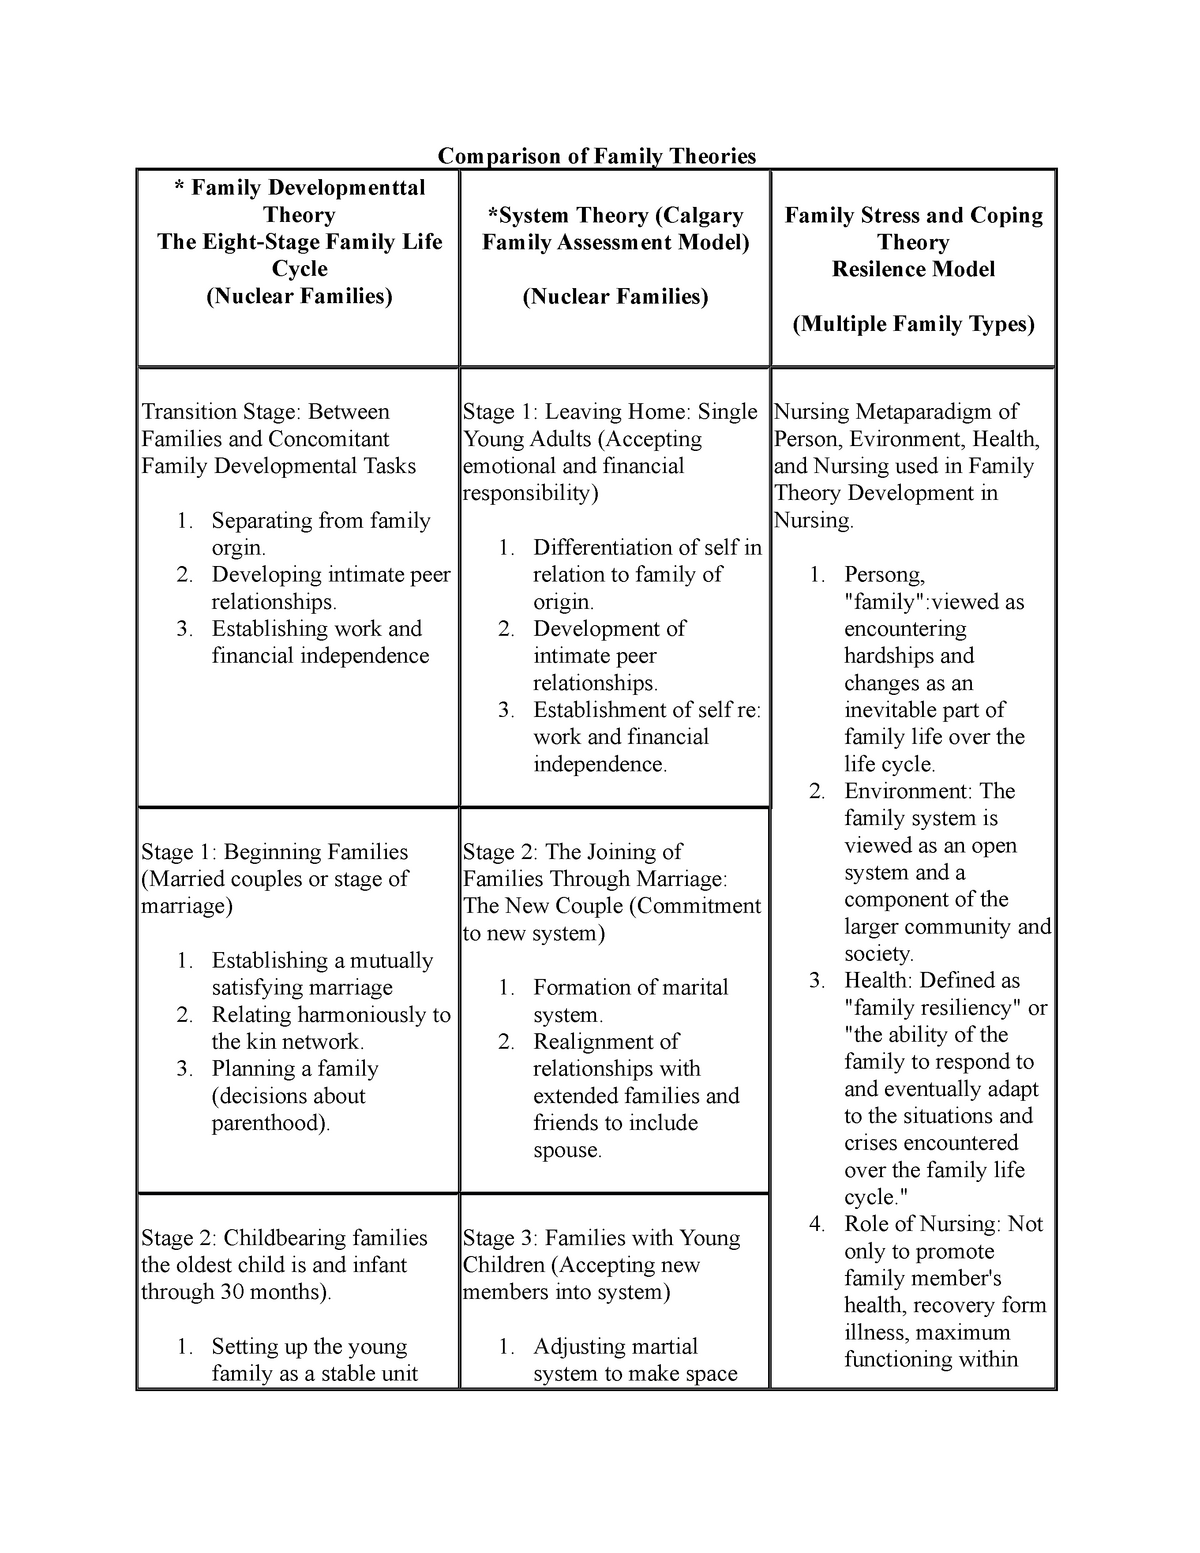 Nursing Theories Comparison Chart